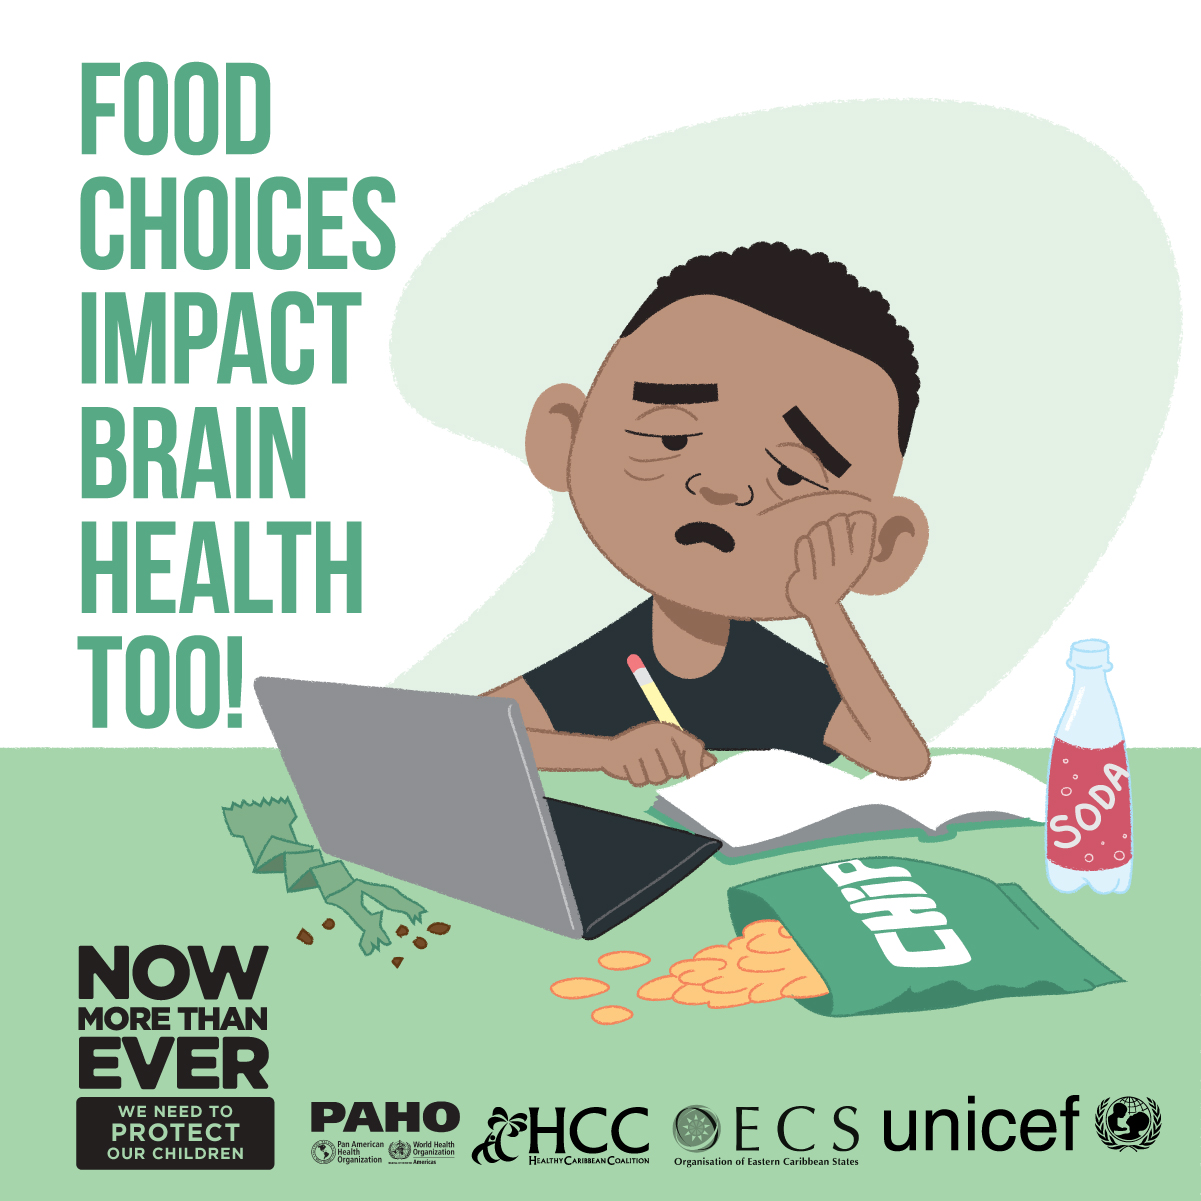 Food choices impact brain health too